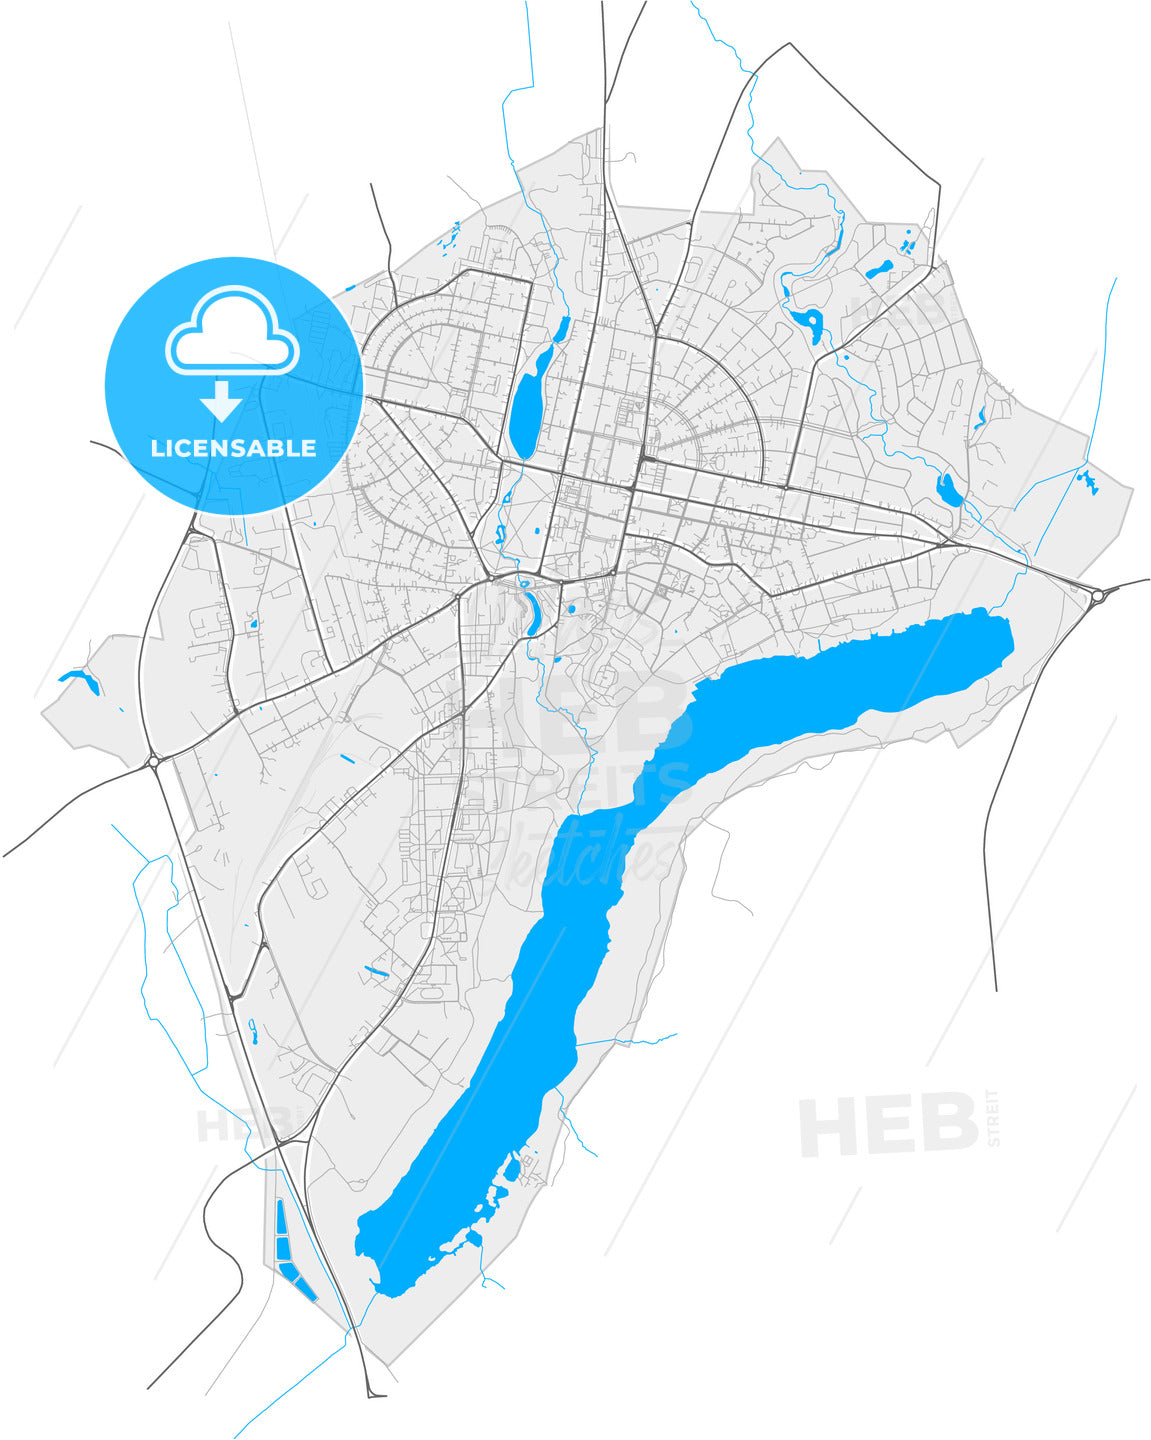 Viljandi, Viljandi, Estonia, high quality vector map